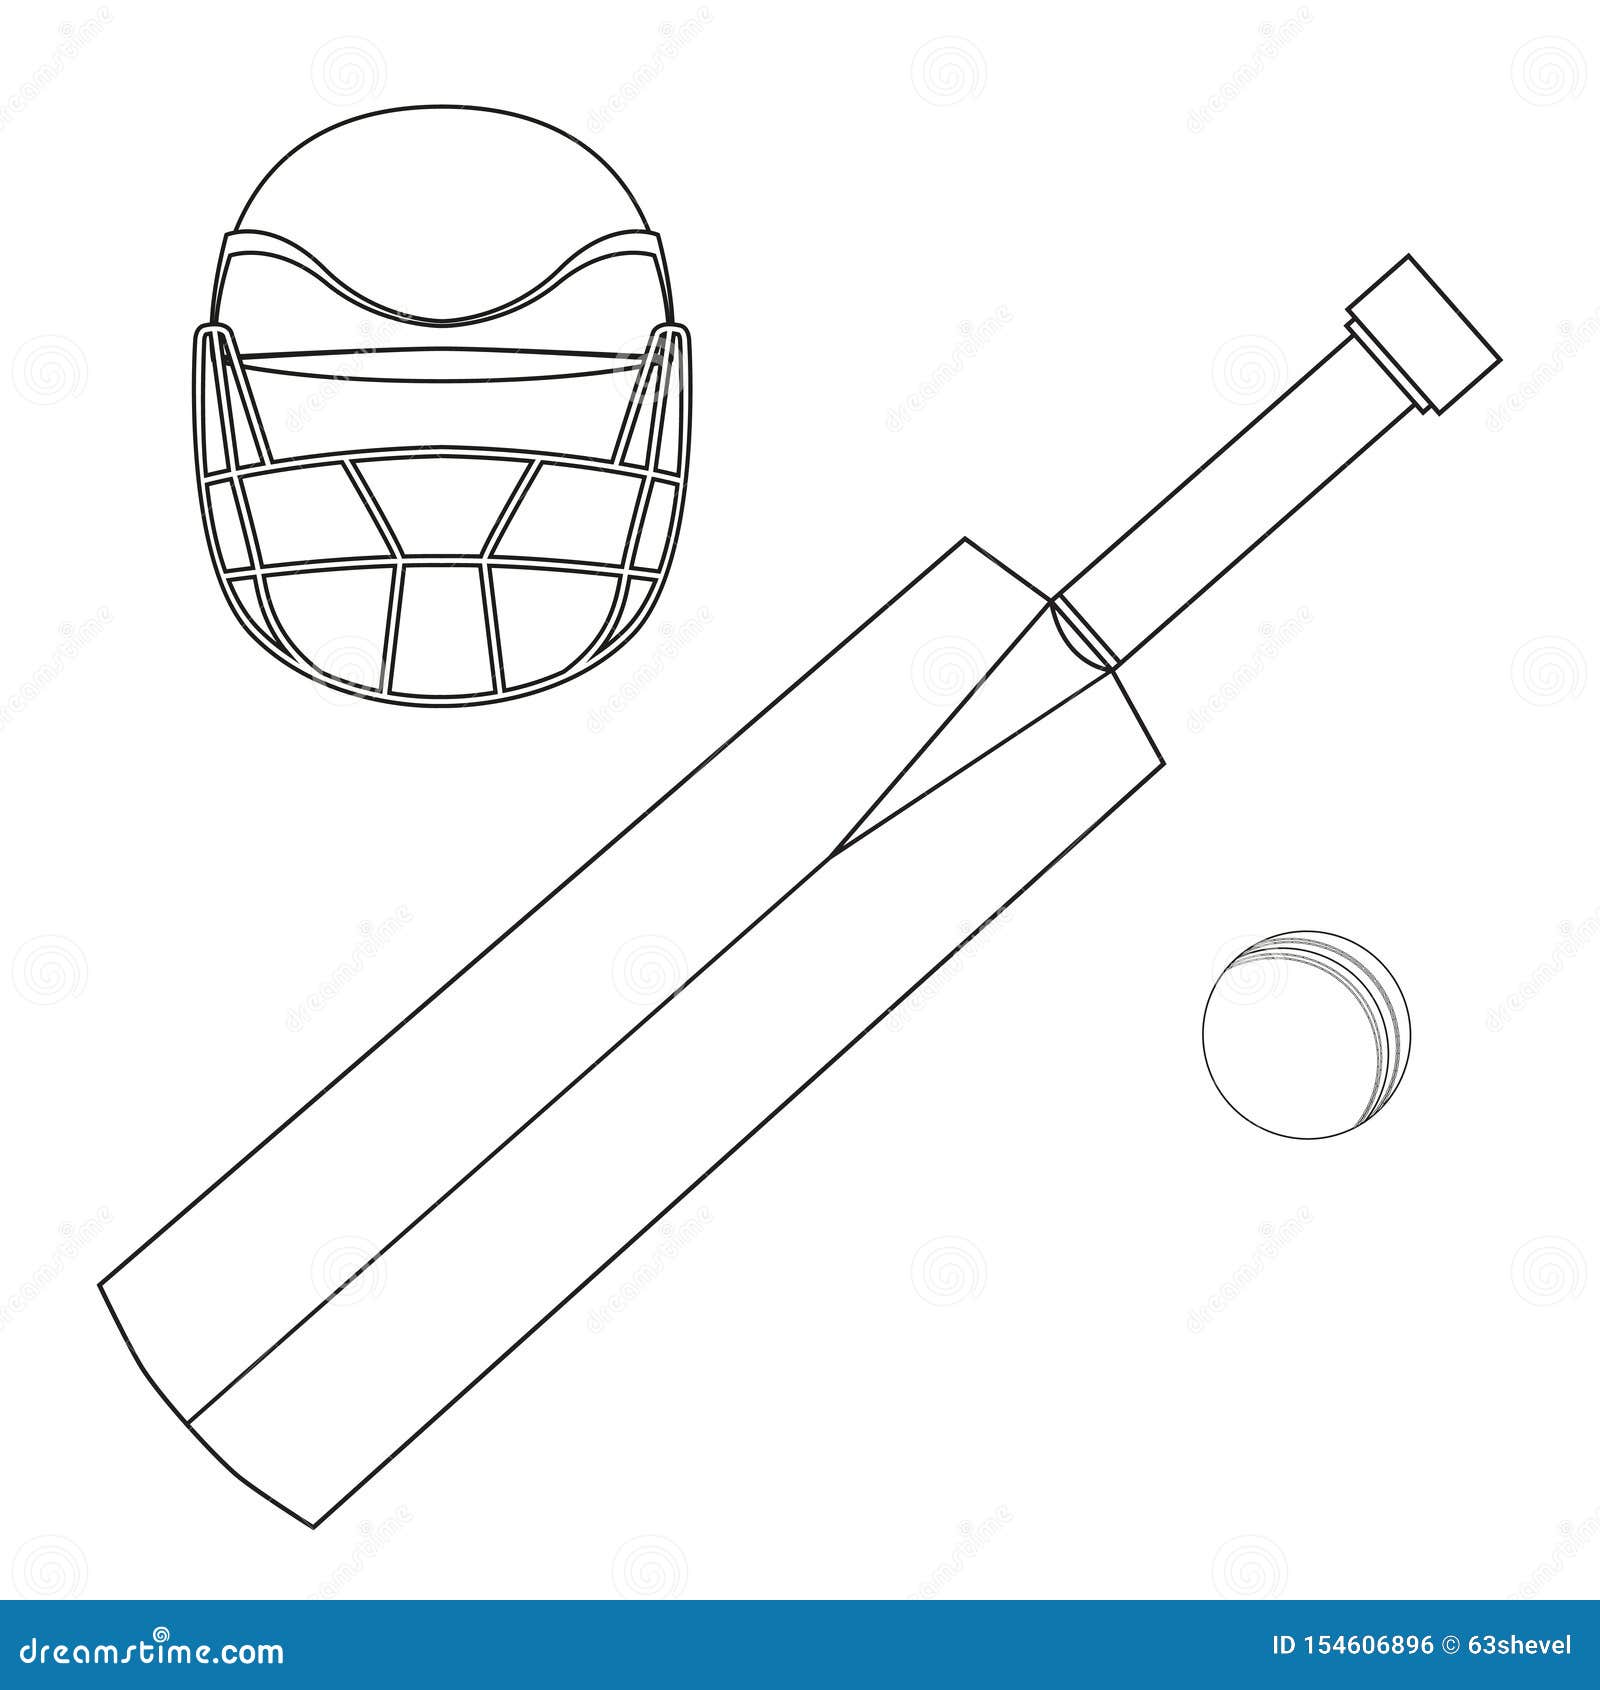 FREE! - Cricket Bat Ball Bails Stumps Wicket Colouring Sheet